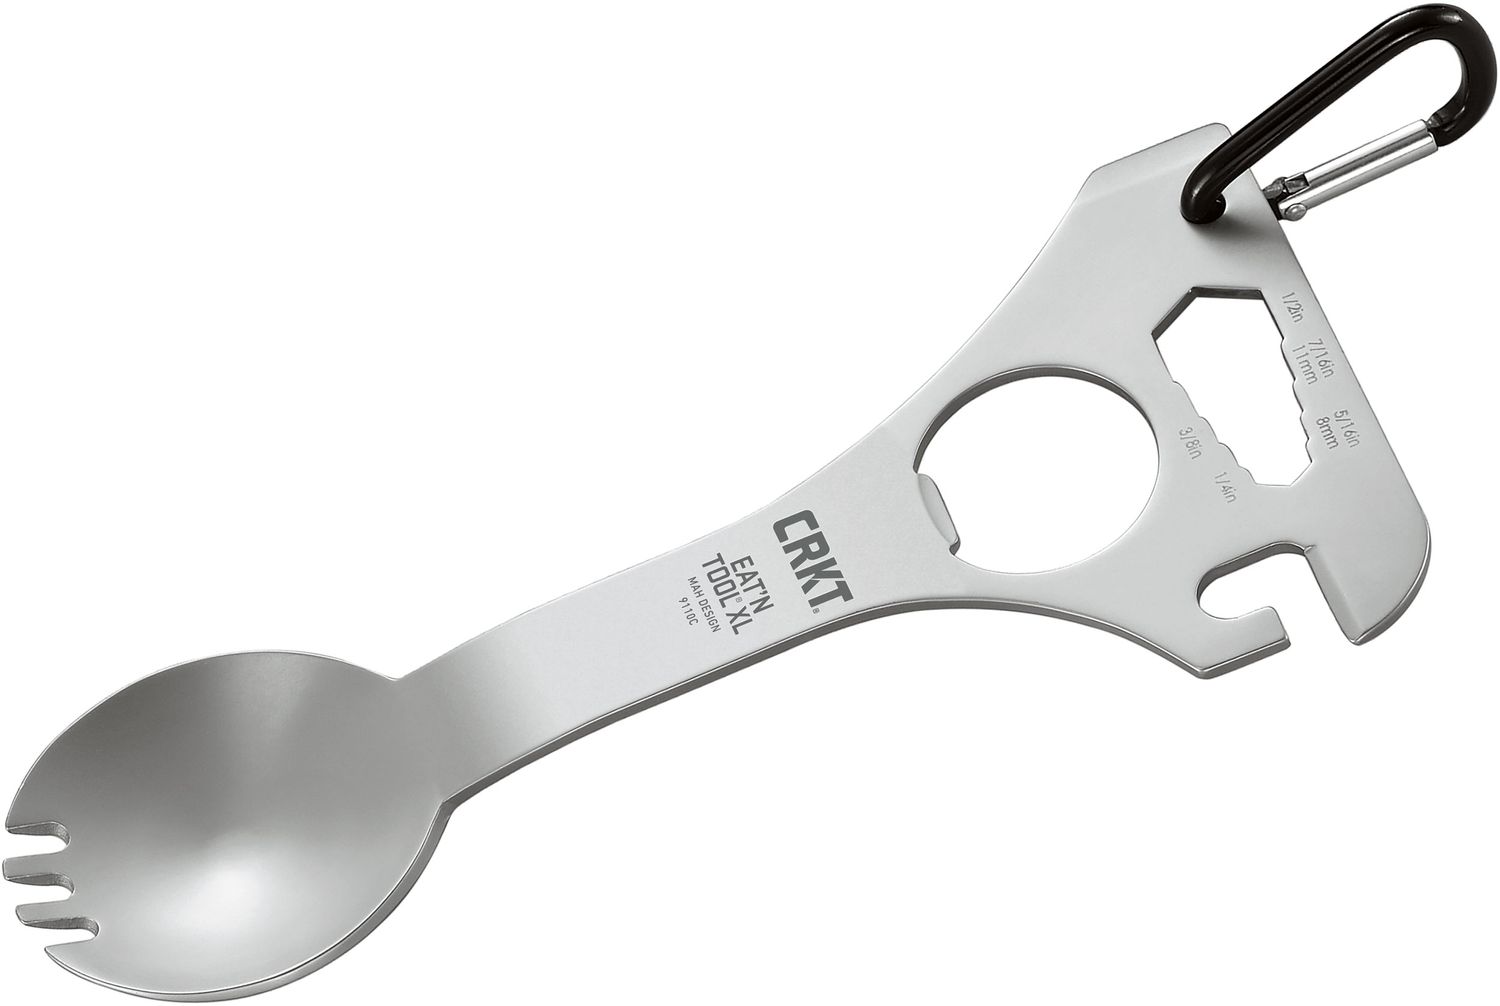 Eat 'N Tool  Out door Multi tool,spoon,Fork,Bottle Opener,Metric Wrenches-EDC 